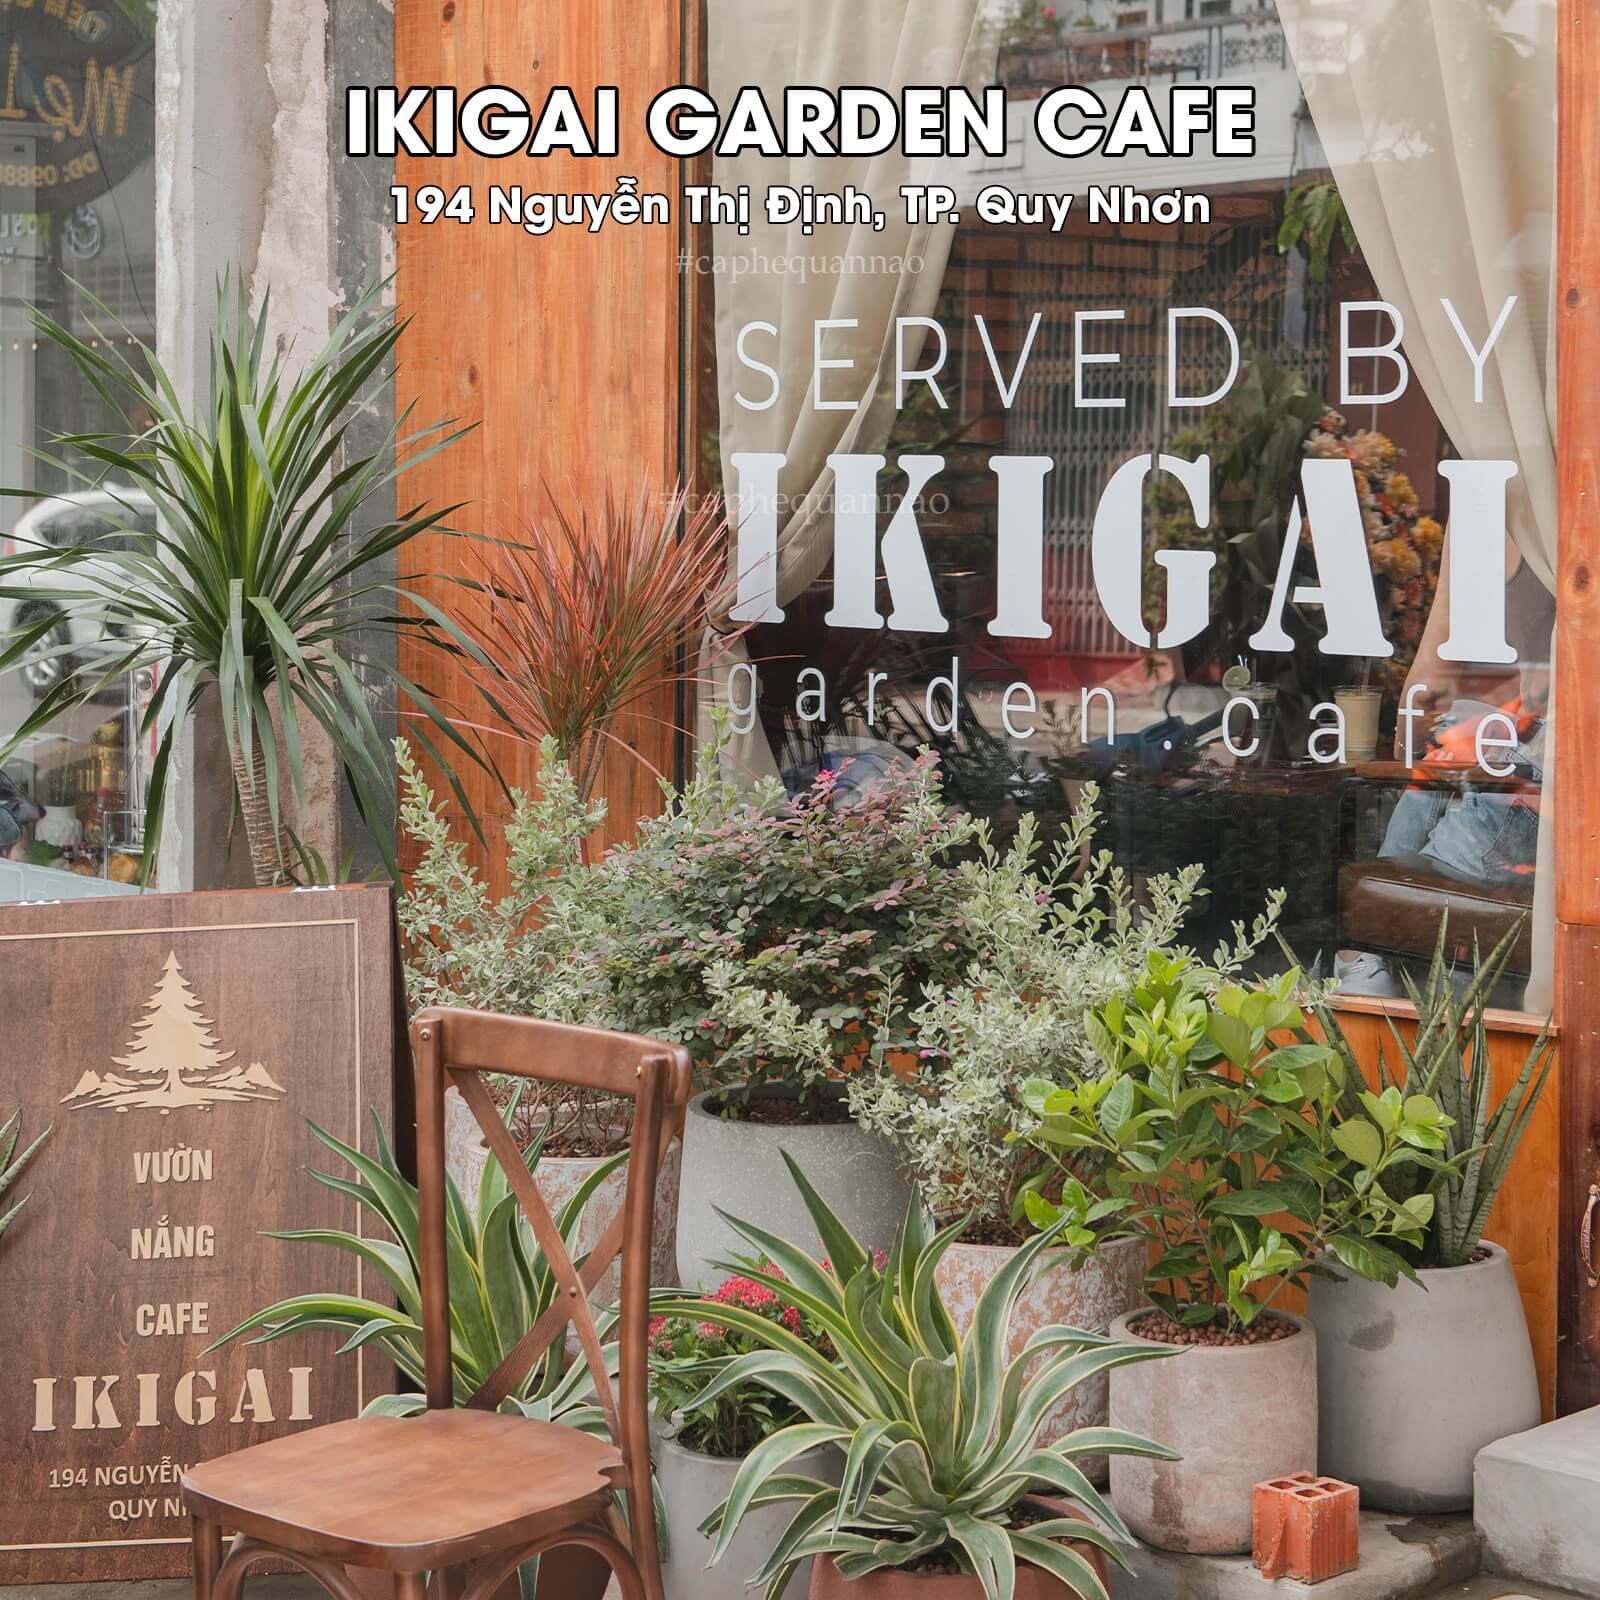 ikigai garden cafe quy nhon